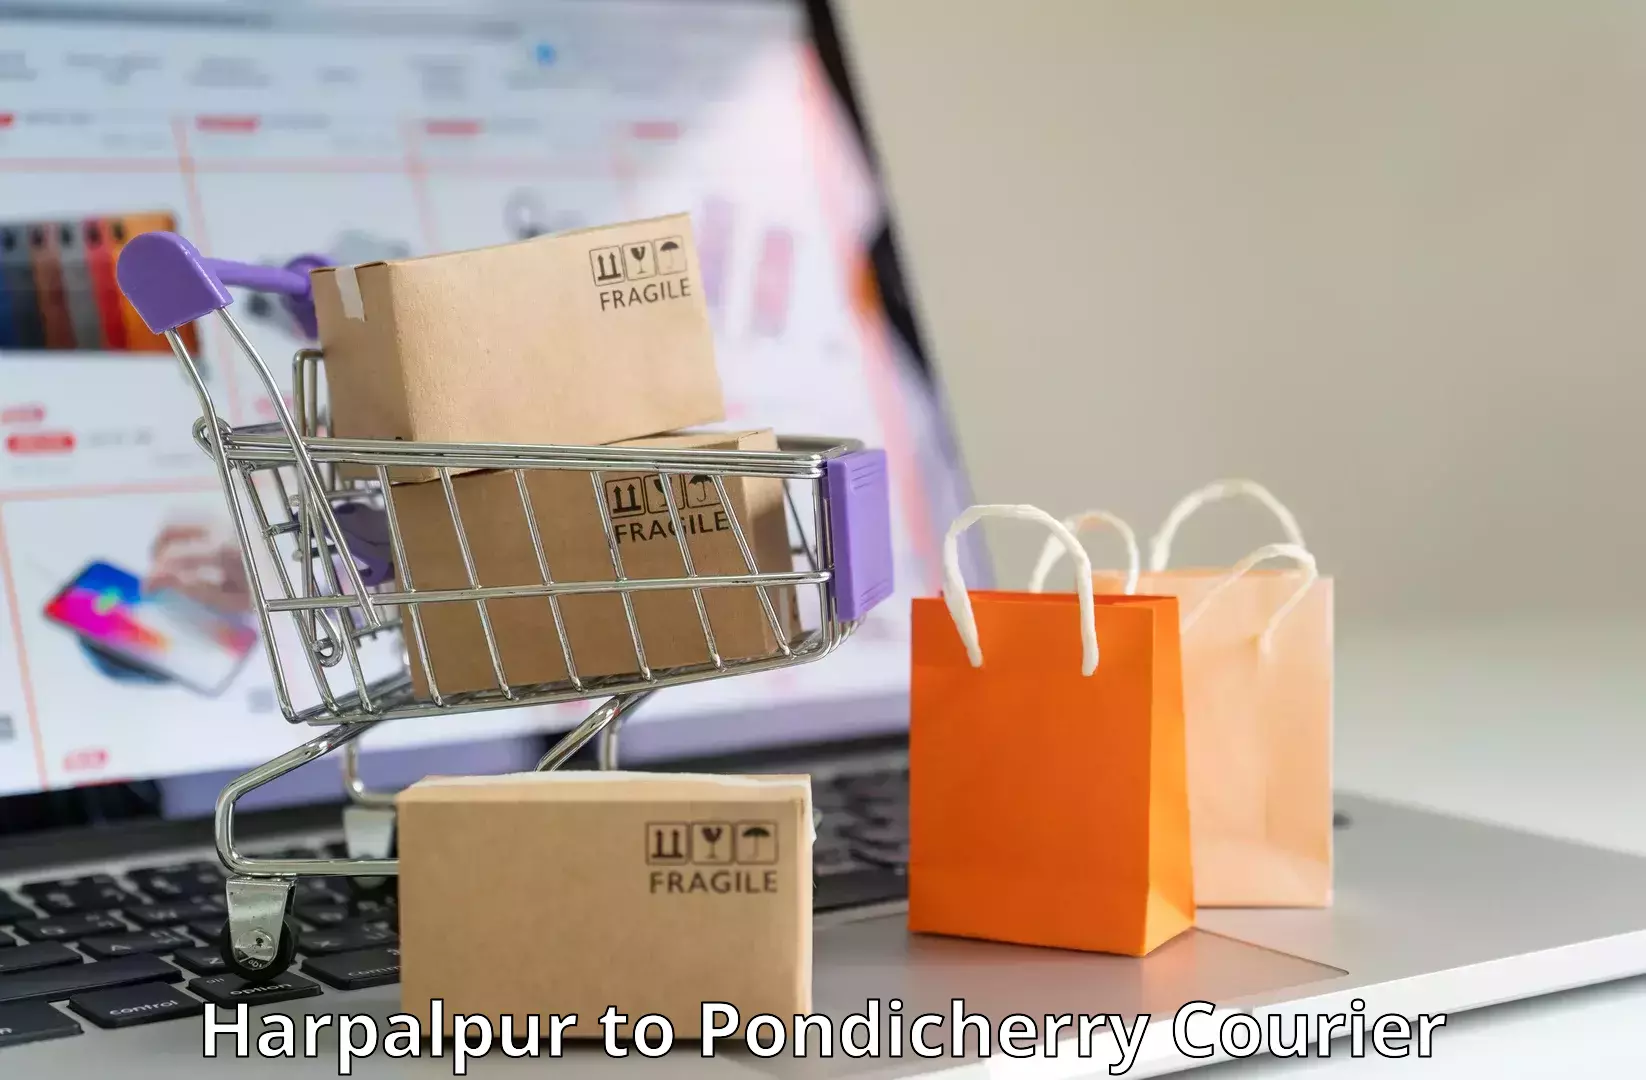 Courier service innovation Harpalpur to Pondicherry University